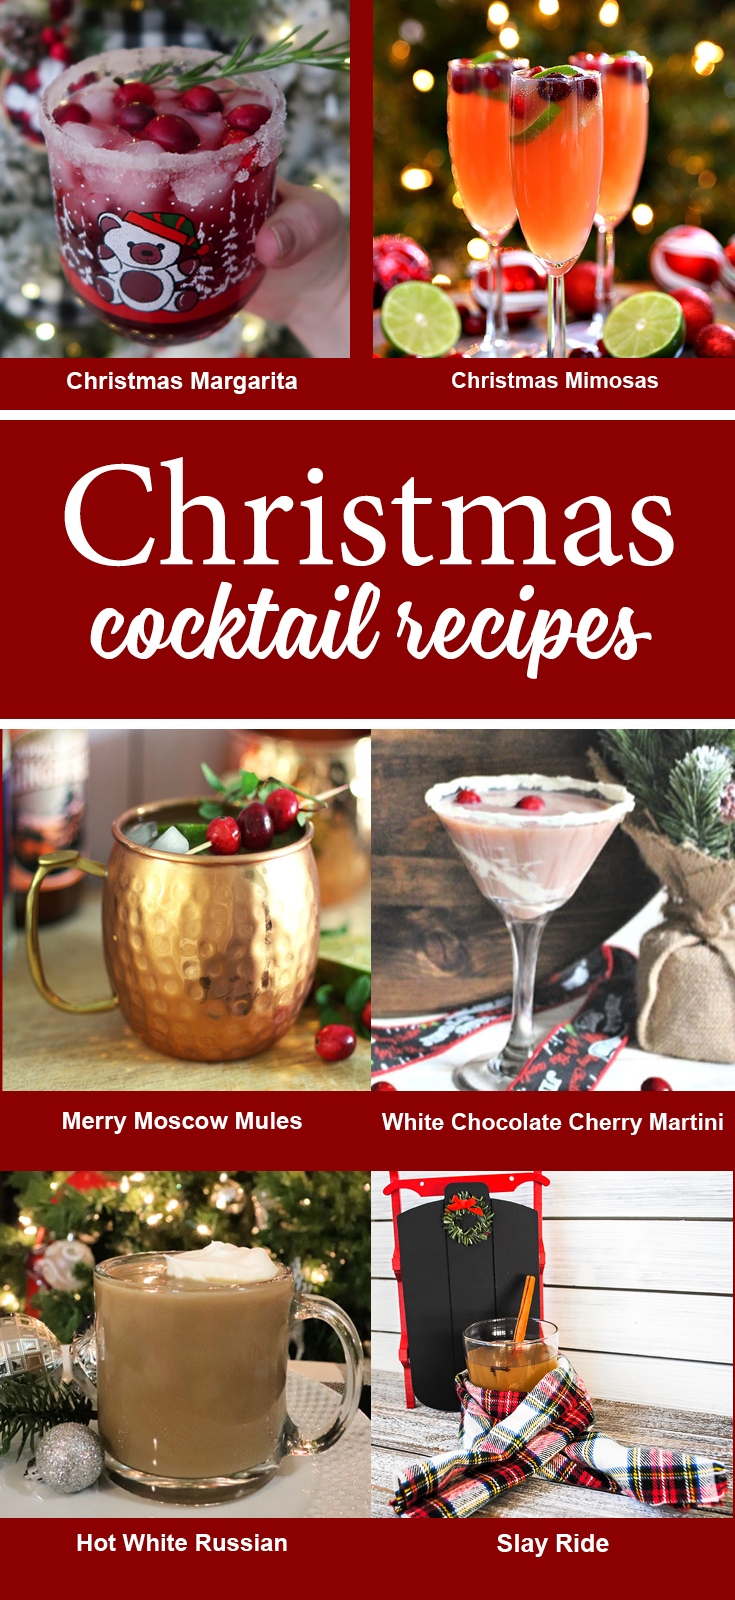 https://www.happygoluckyblog.com/wp-content/uploads/2018/12/6-Christmas-Cocktails1.jpg